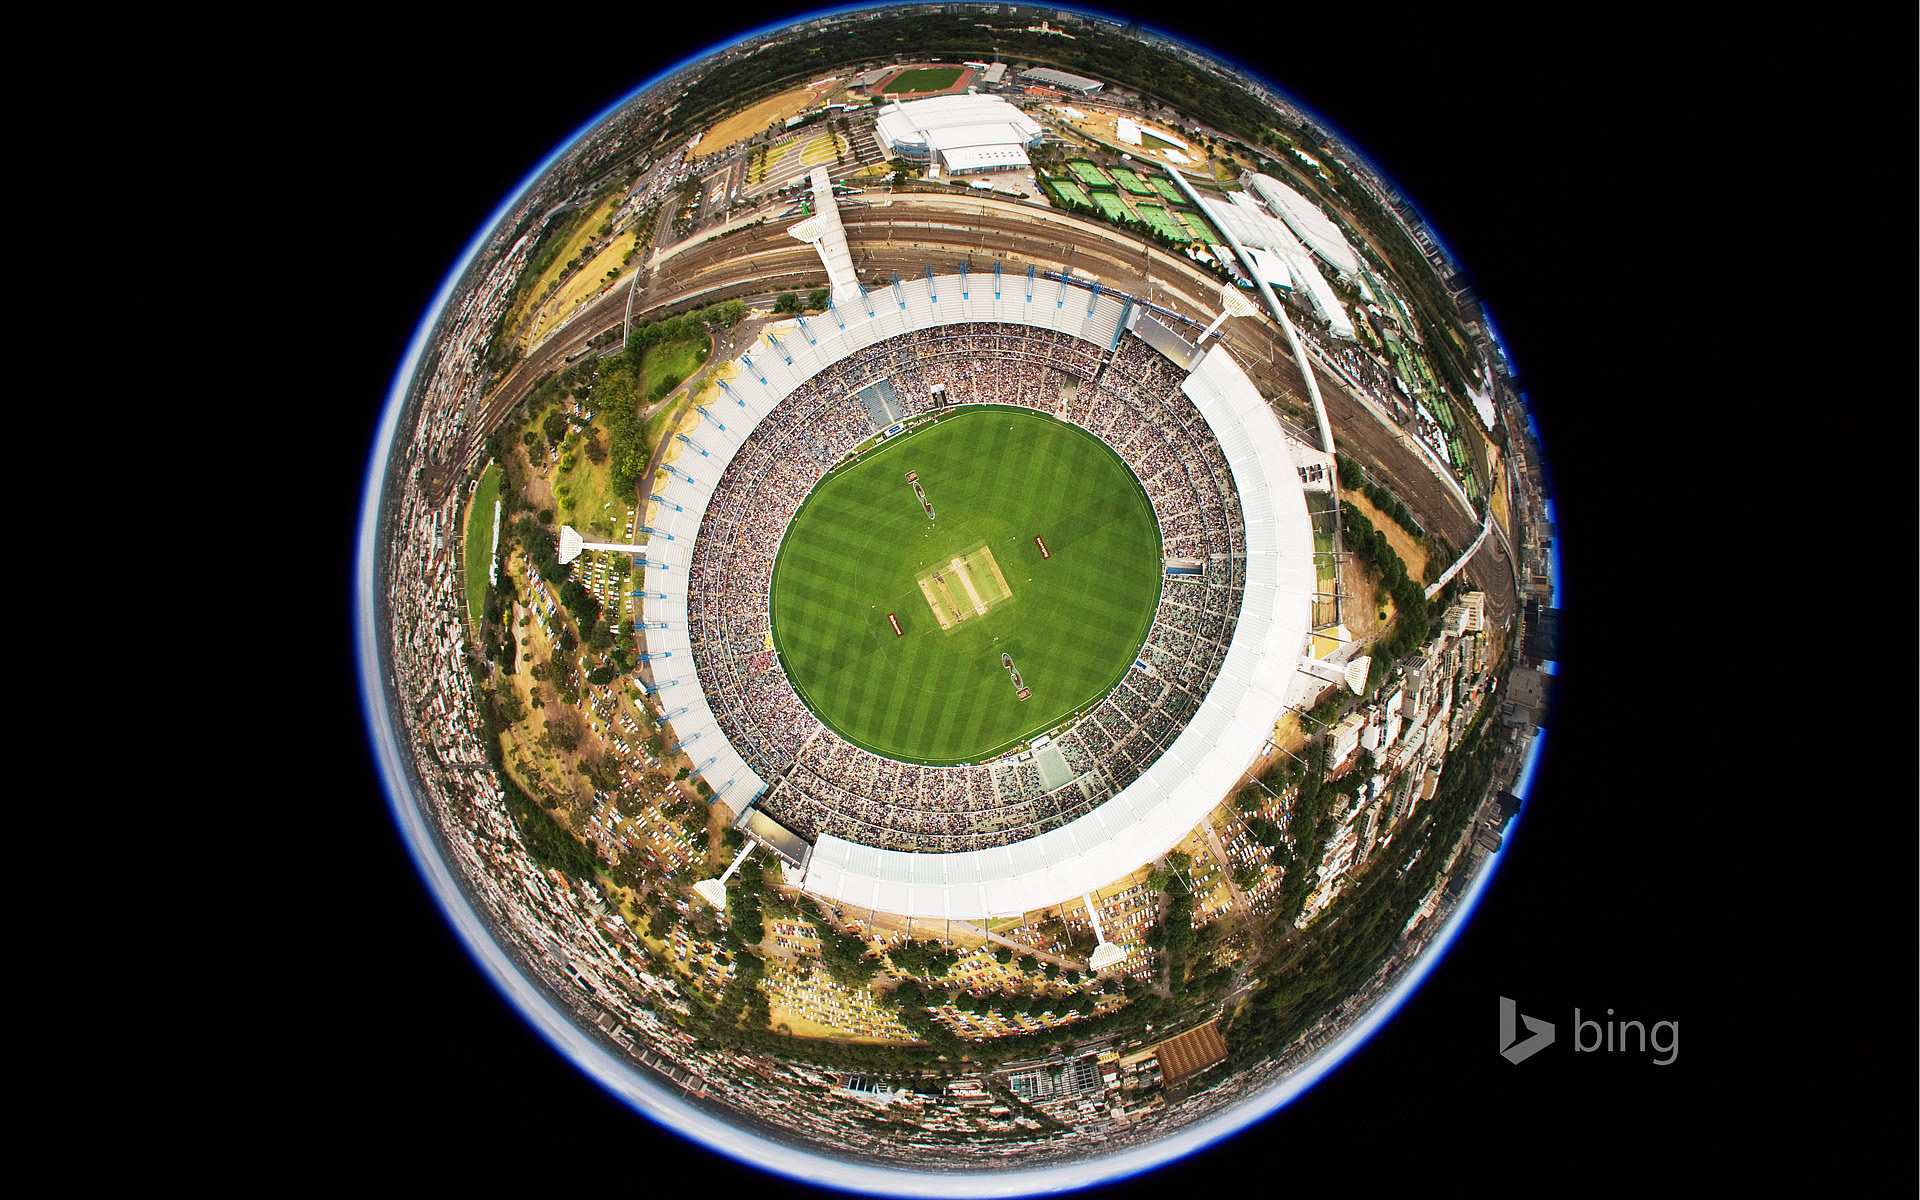 Melbourne Cricket Ground in Victoria, Australia